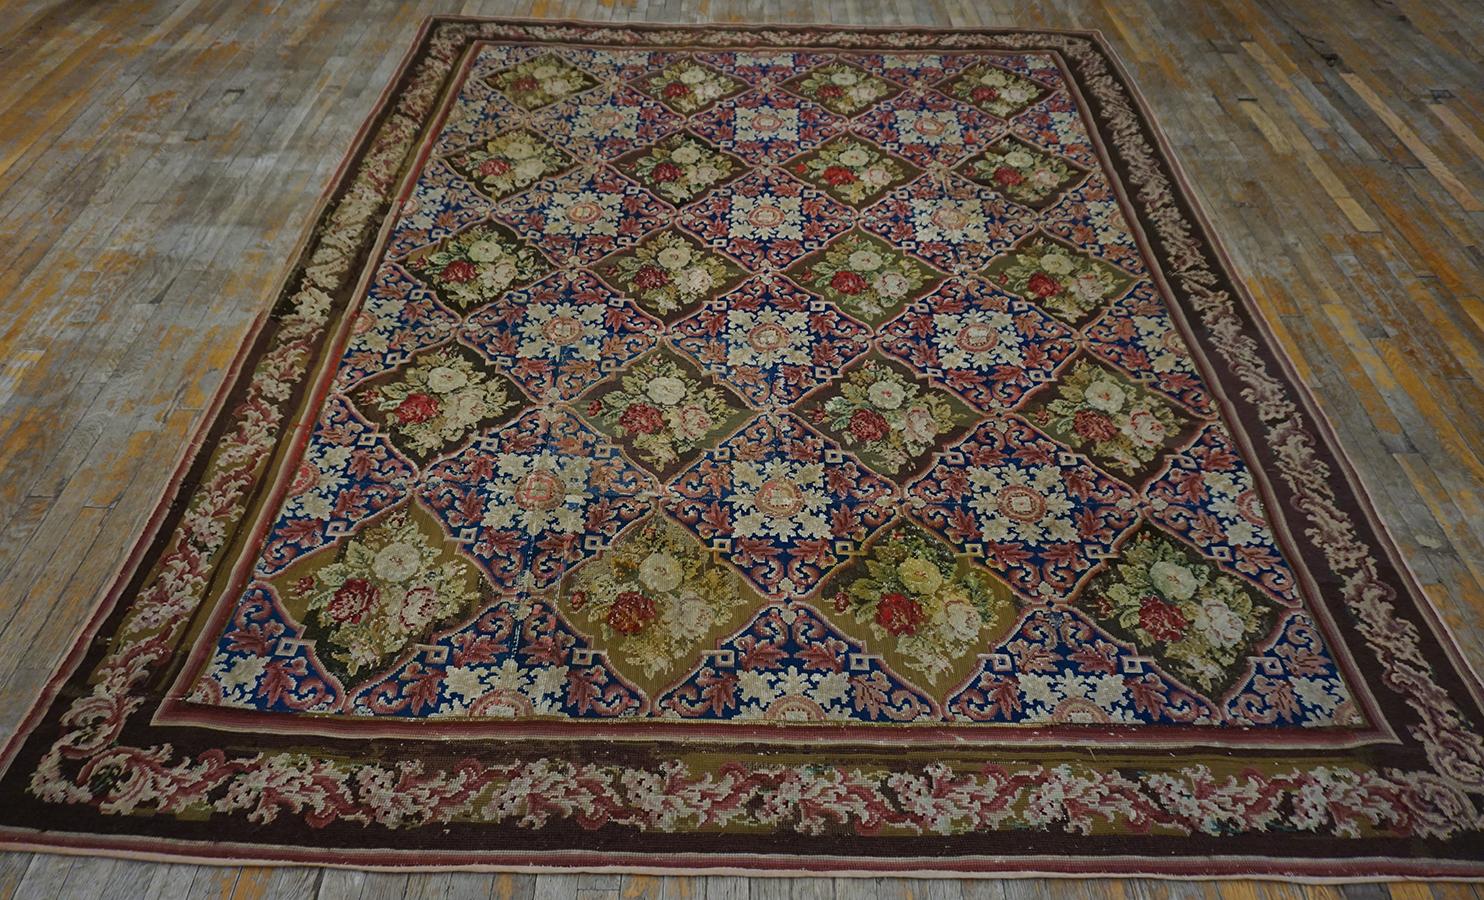 Late 19th Century 19th Century English Needlepoint Carpet ( 7'6